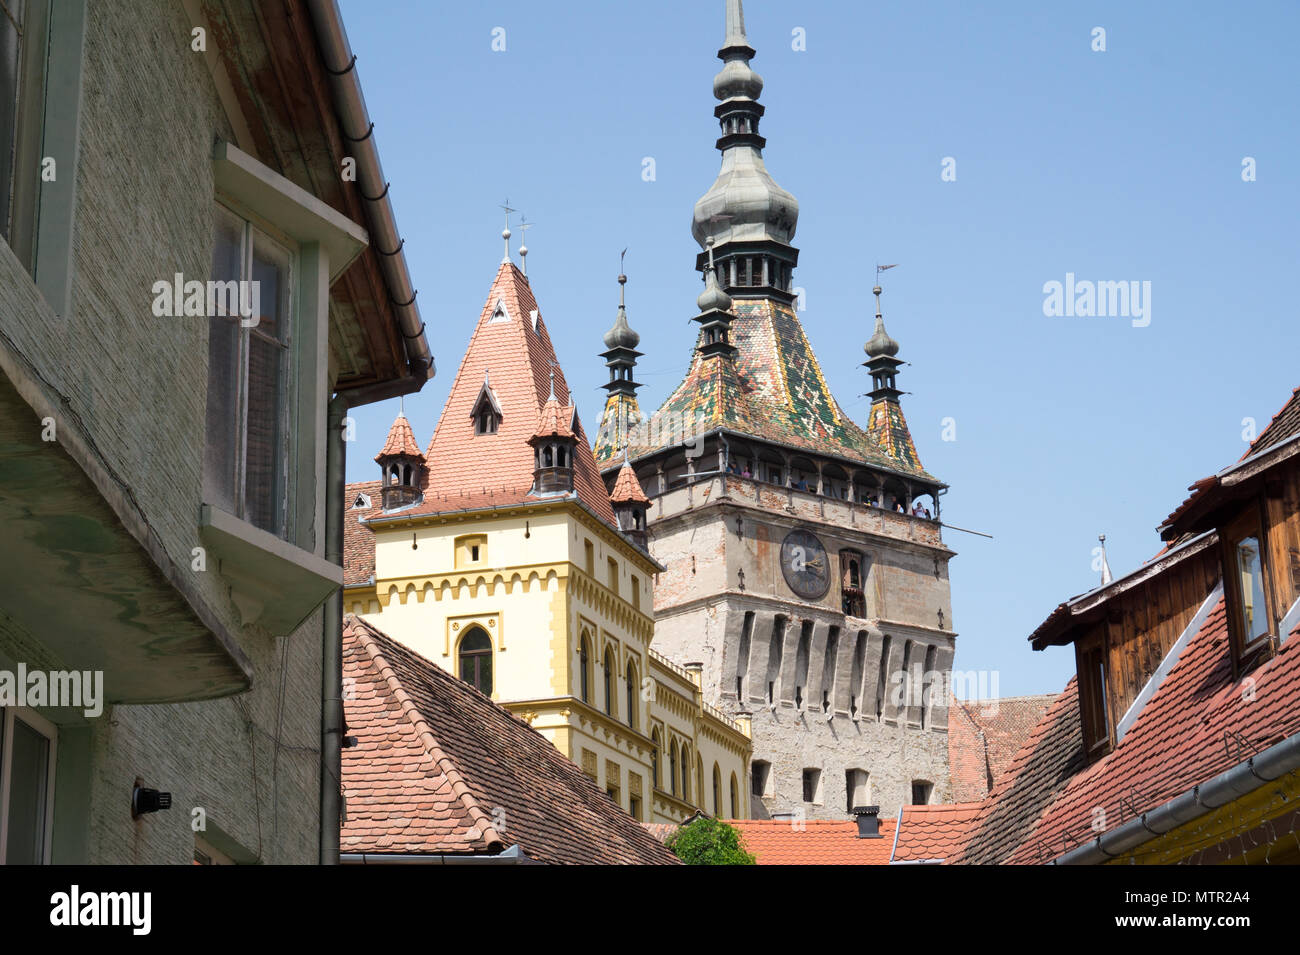 Street scene with historical clock tower Sighisoara Transivania Romania. Stock Photo